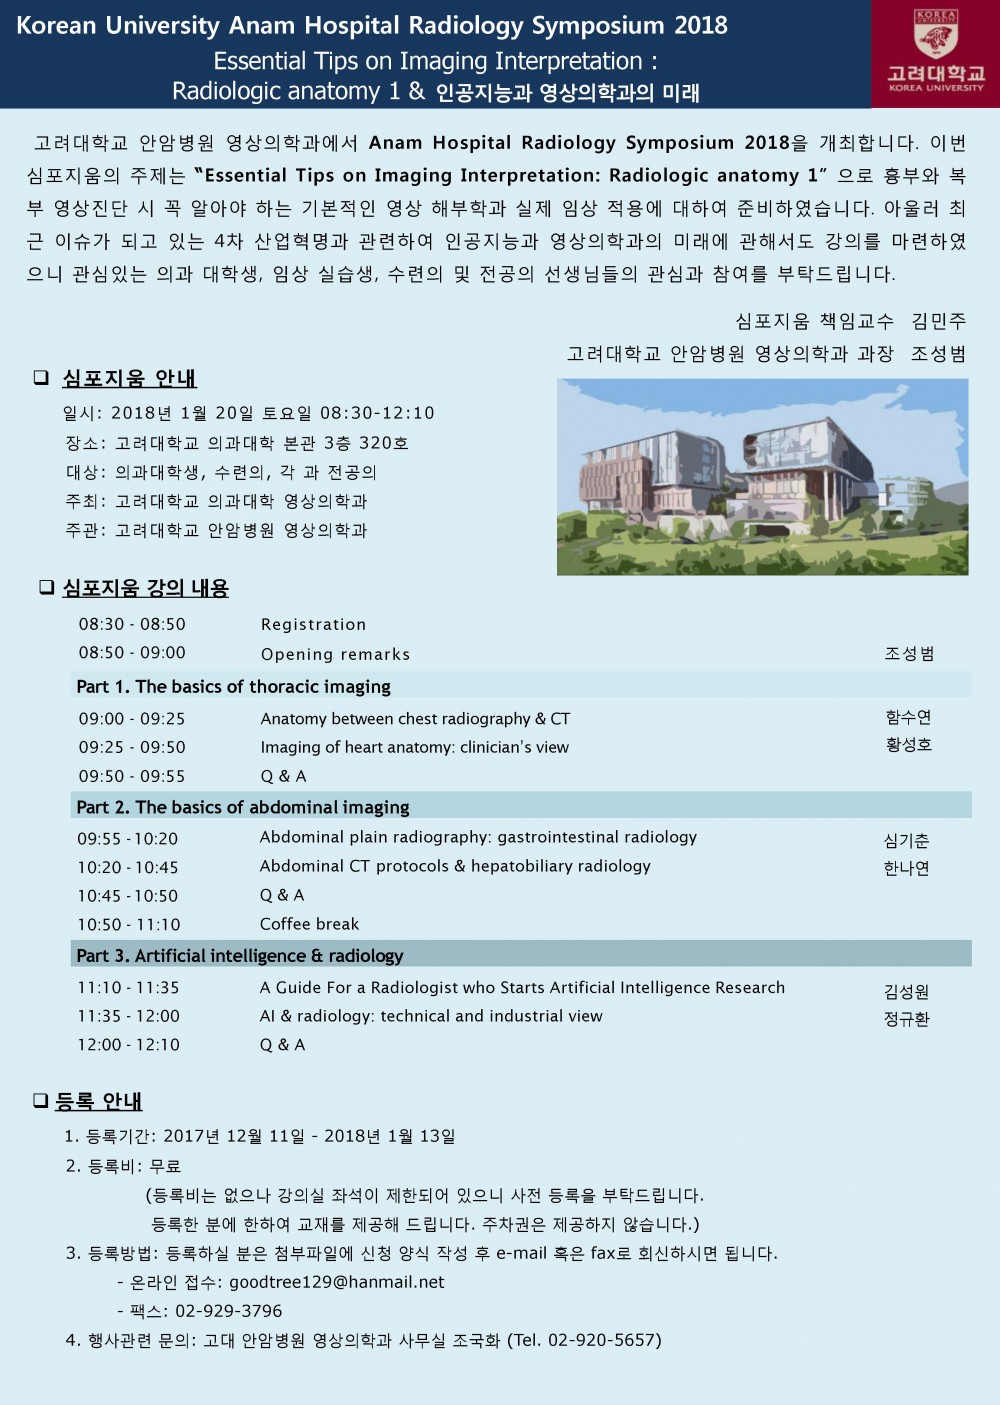 Korean University Anam Hospital RadiologySymposium2018